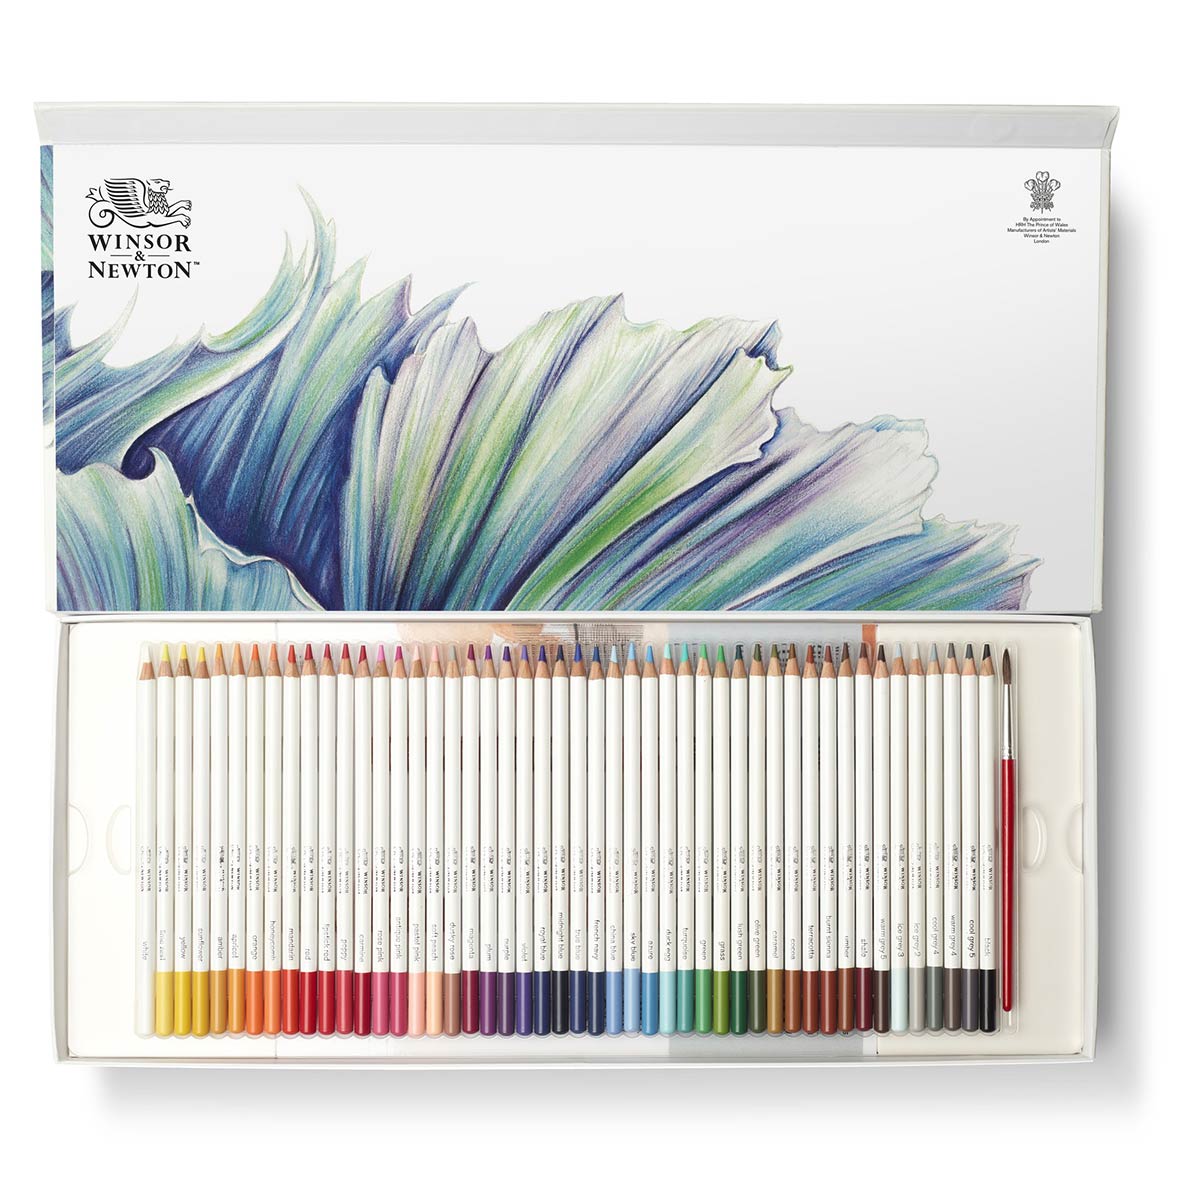 Derwent Colored Pencils, Watercolor, Water Color Pencils, Drawing, Art,  Metal Tin, 24 Count (0700304)